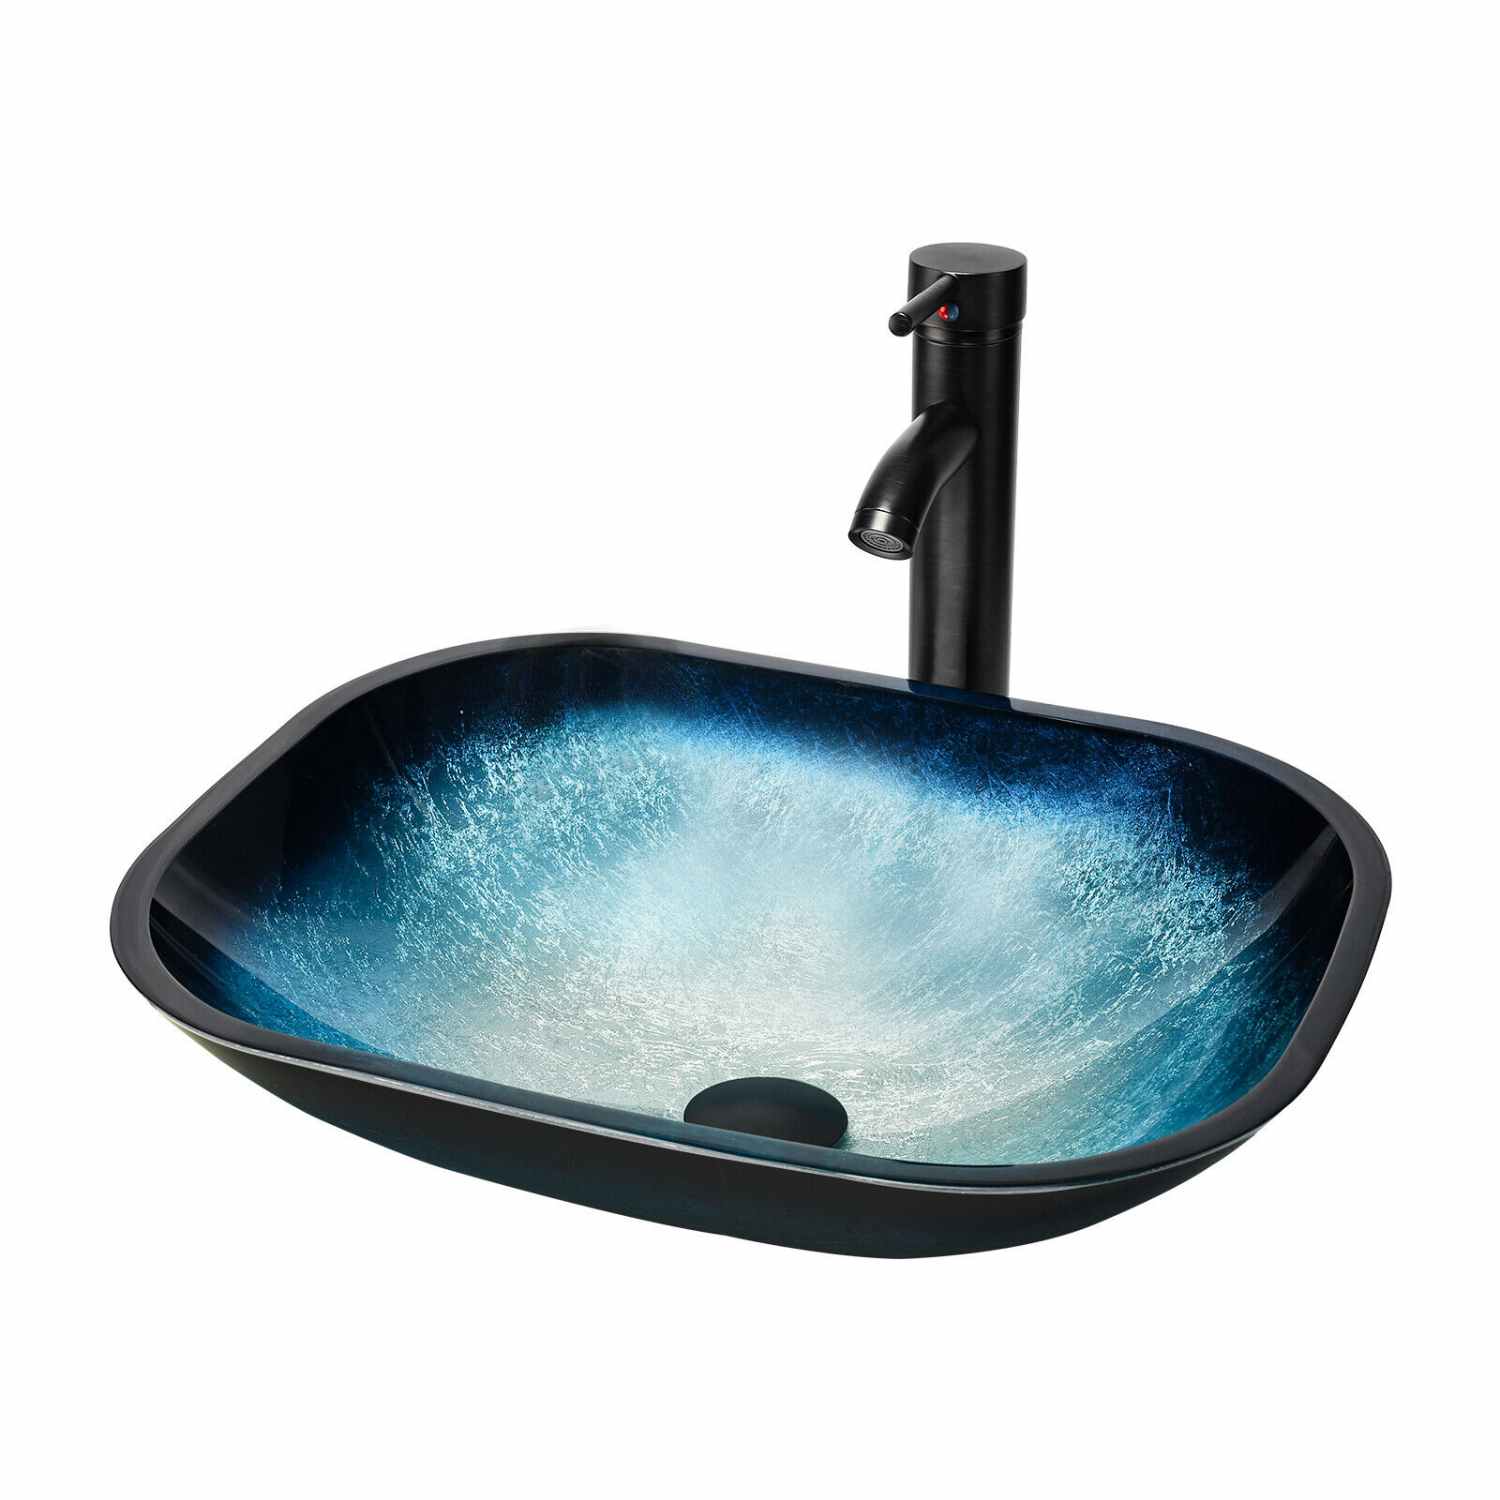 Elecwish Square Blue Sink